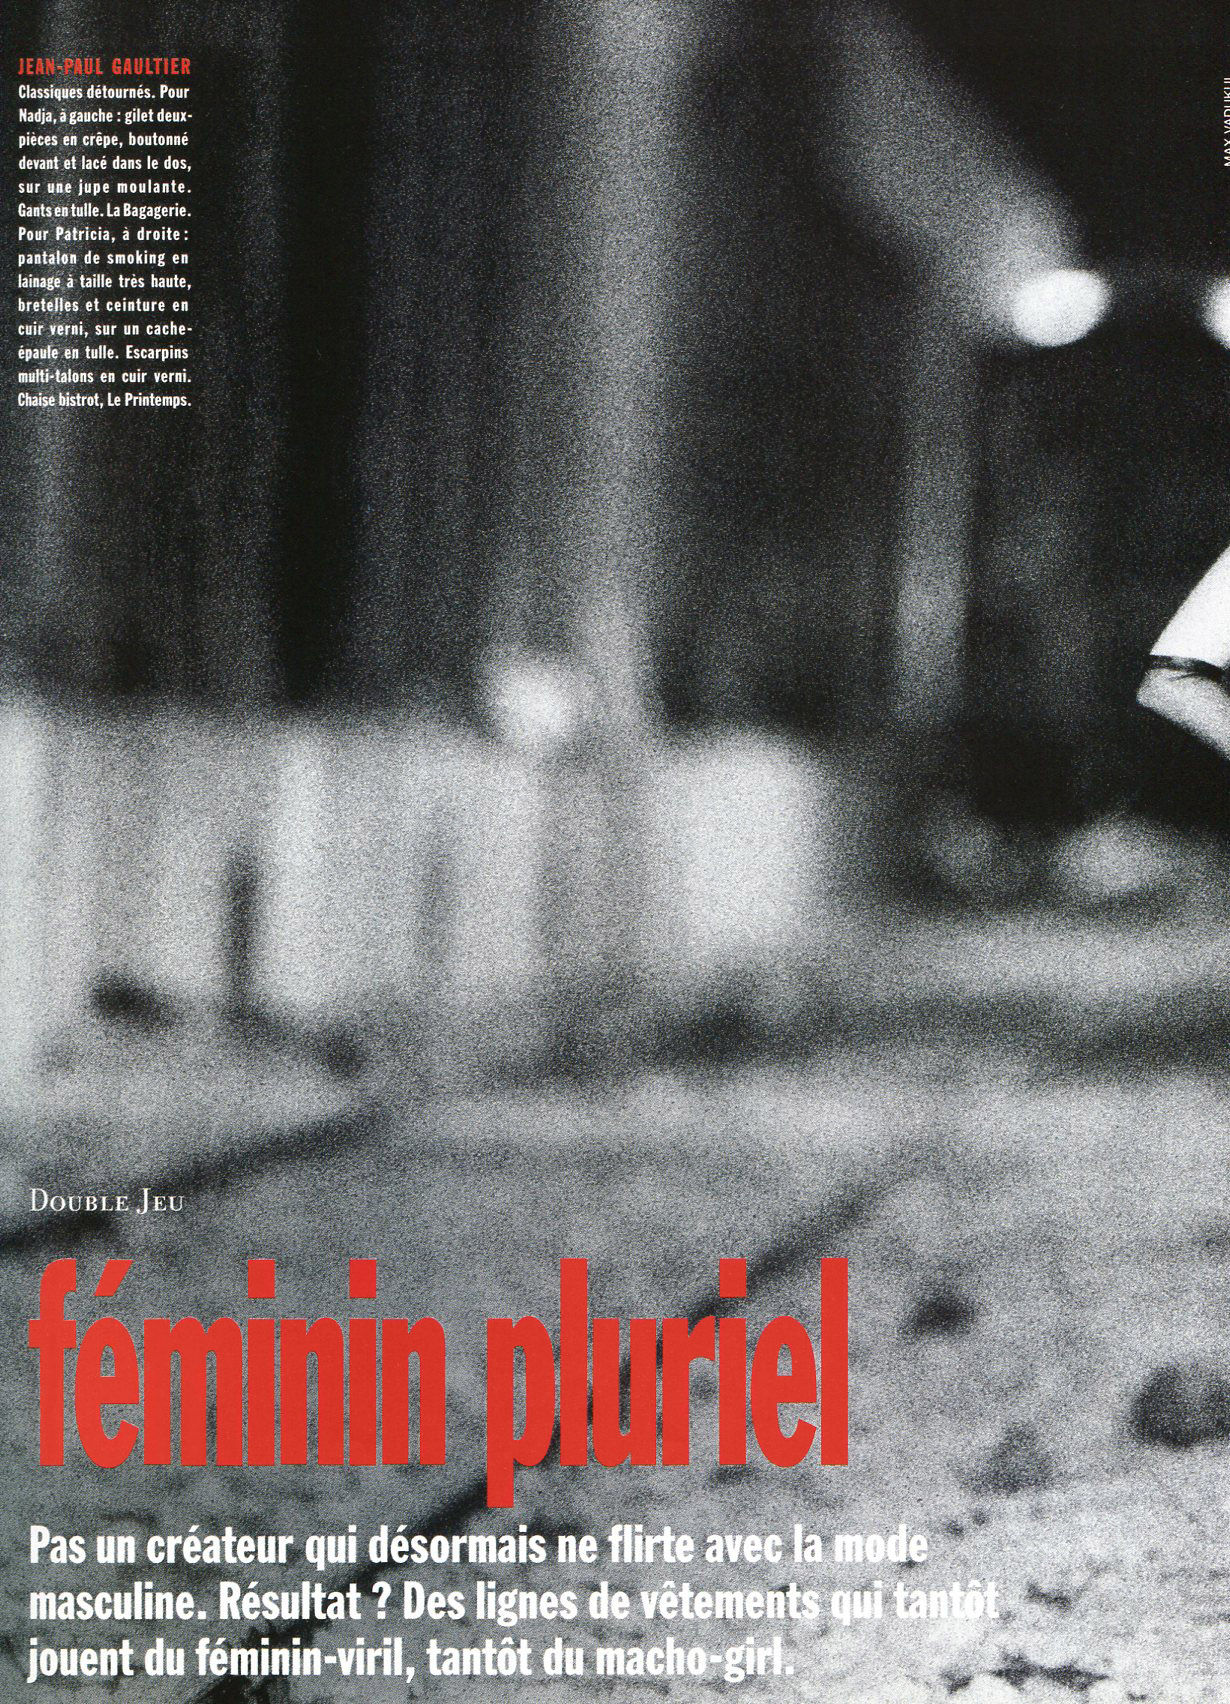 Vadukul Vogue Paris February 1993 01